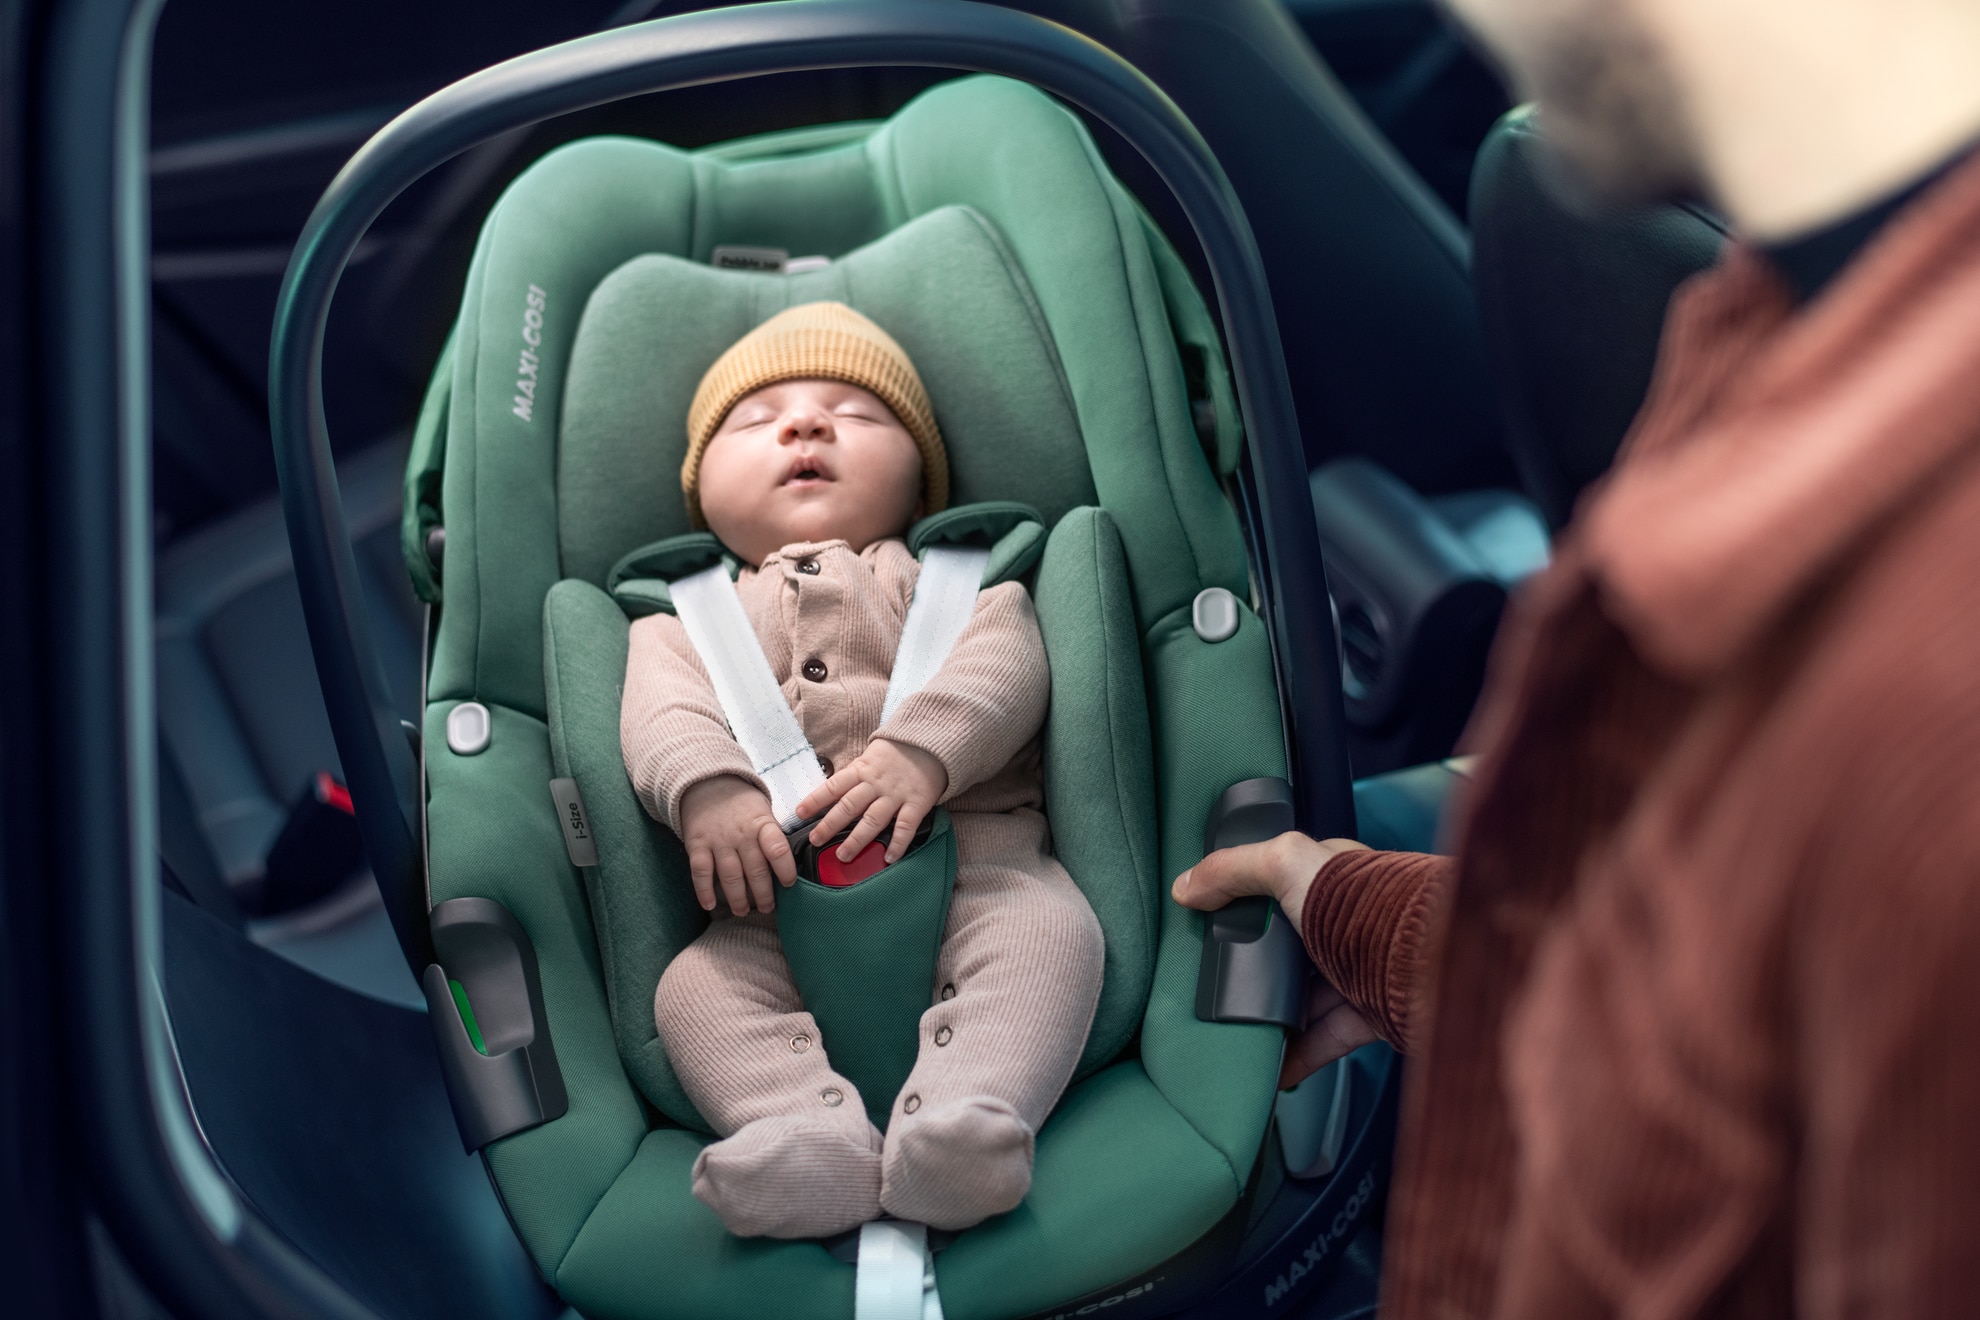 Maxi Cosi Pearl 360 Kindersitz Authentic Grey - Margaretha's Bébé- &  Kinderparadies AG